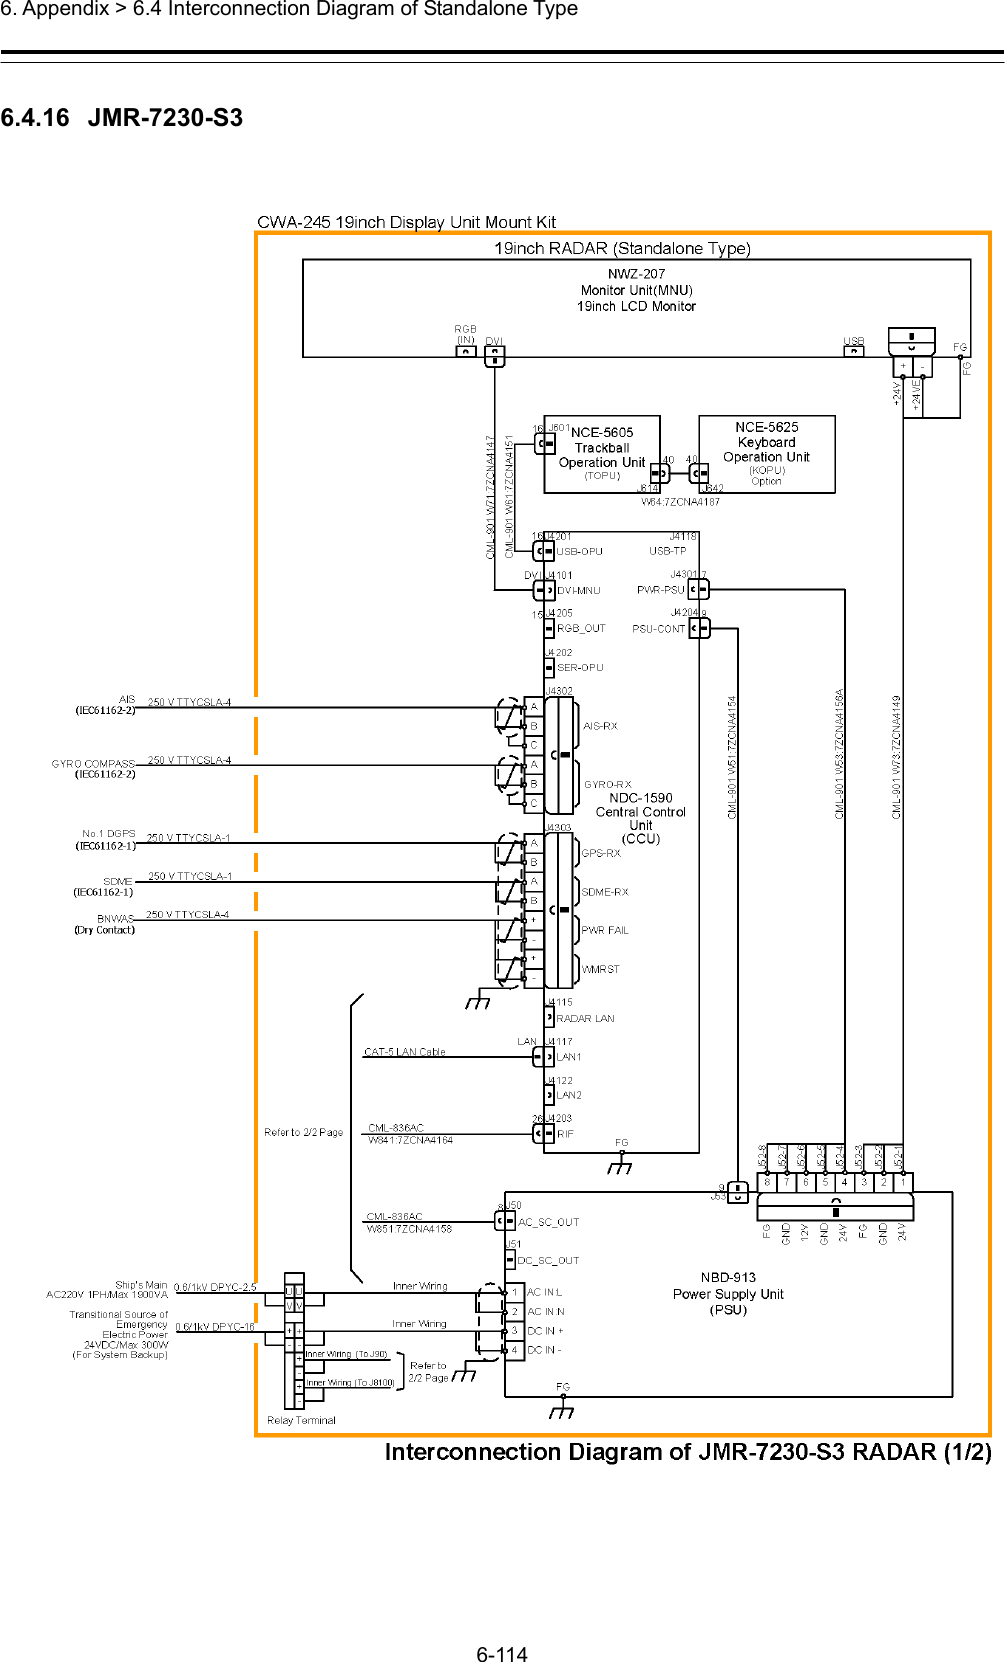  6. Appendix &gt; 6.4 Interconnection Diagram of Standalone Type 6-114  6.4.16  JMR-7230-S3 